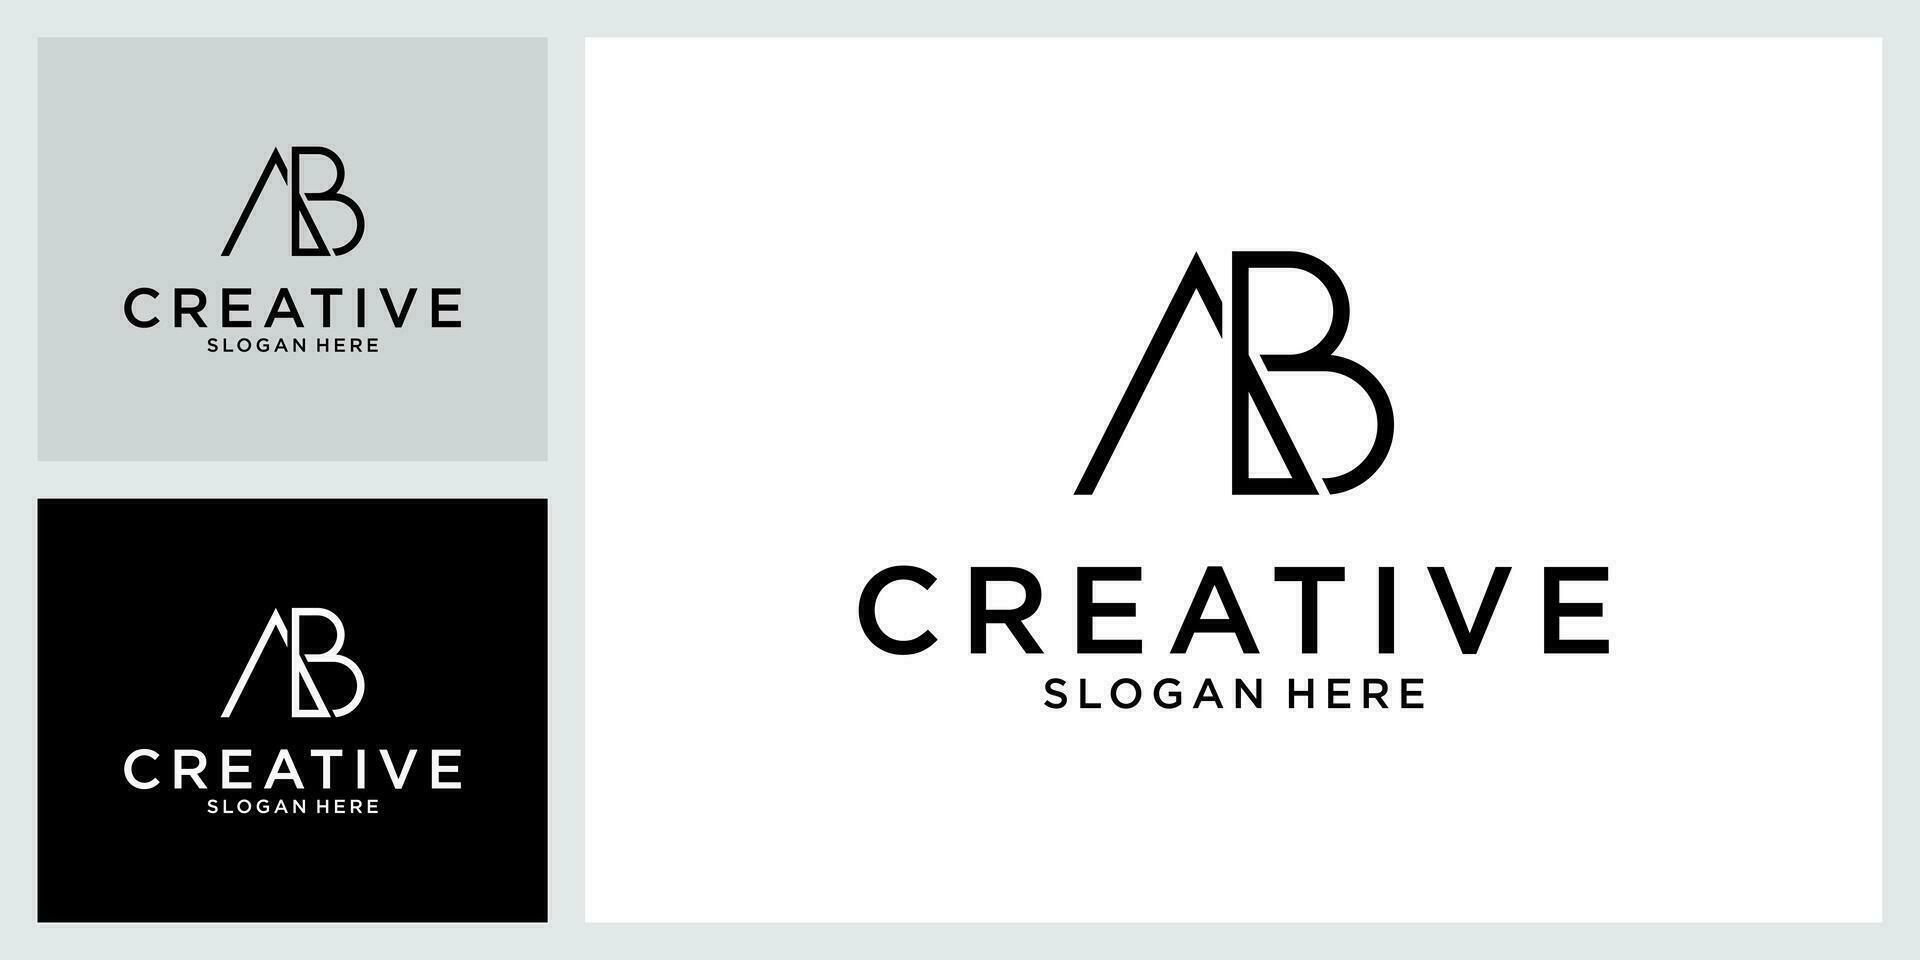 AB or BA initial letter logo design vector